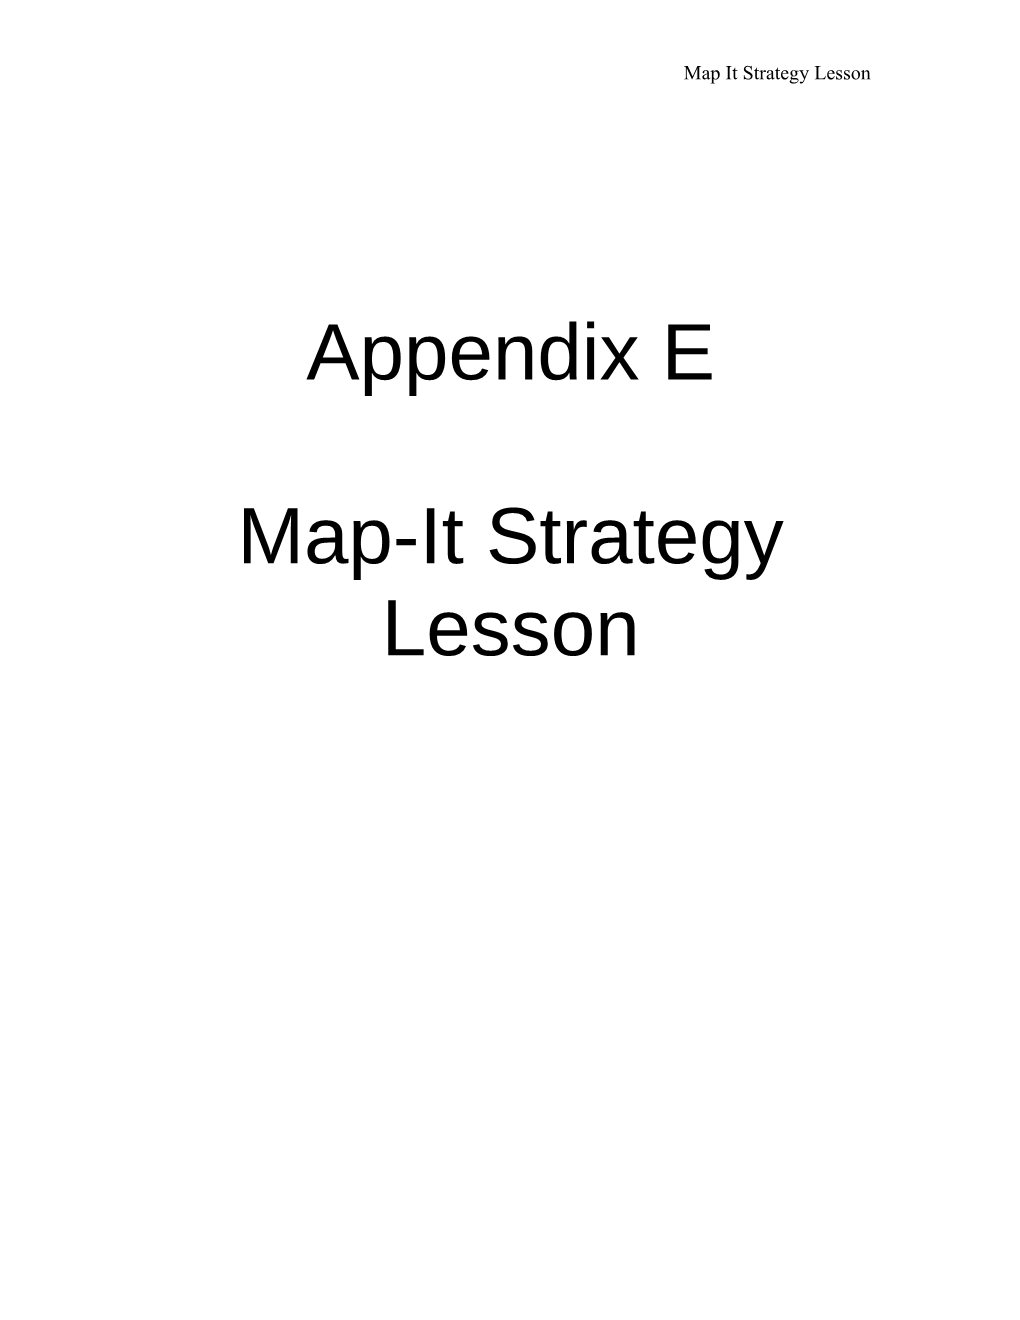 MAPS-It Strategy